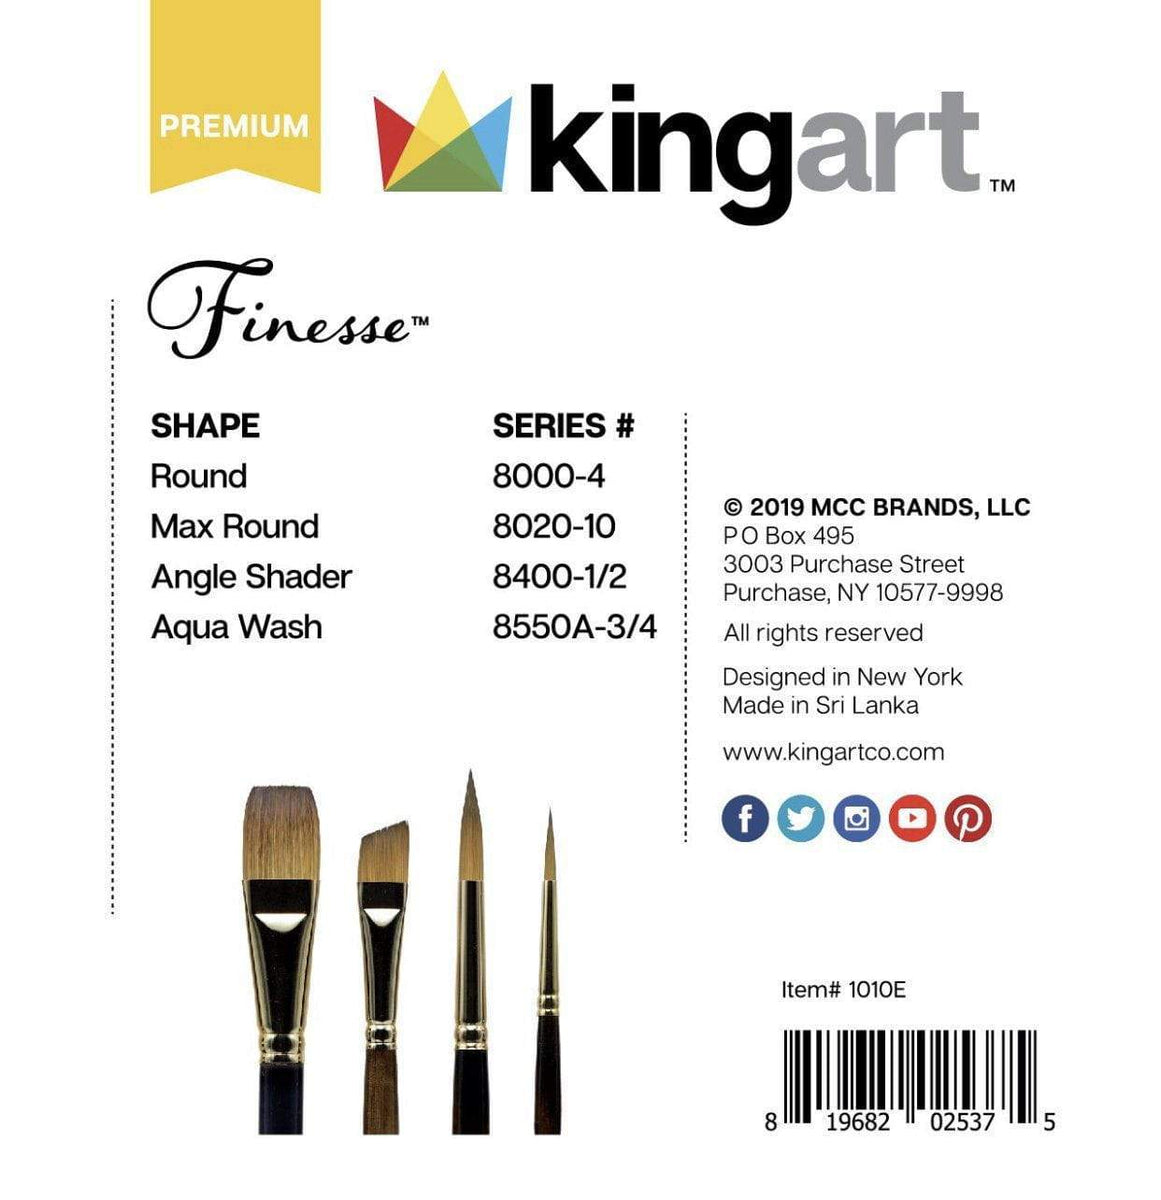 Kingart Finesse Kolinsky Sable Synthetic Blend Premium Watercolor Artist Brushes, Set of 12